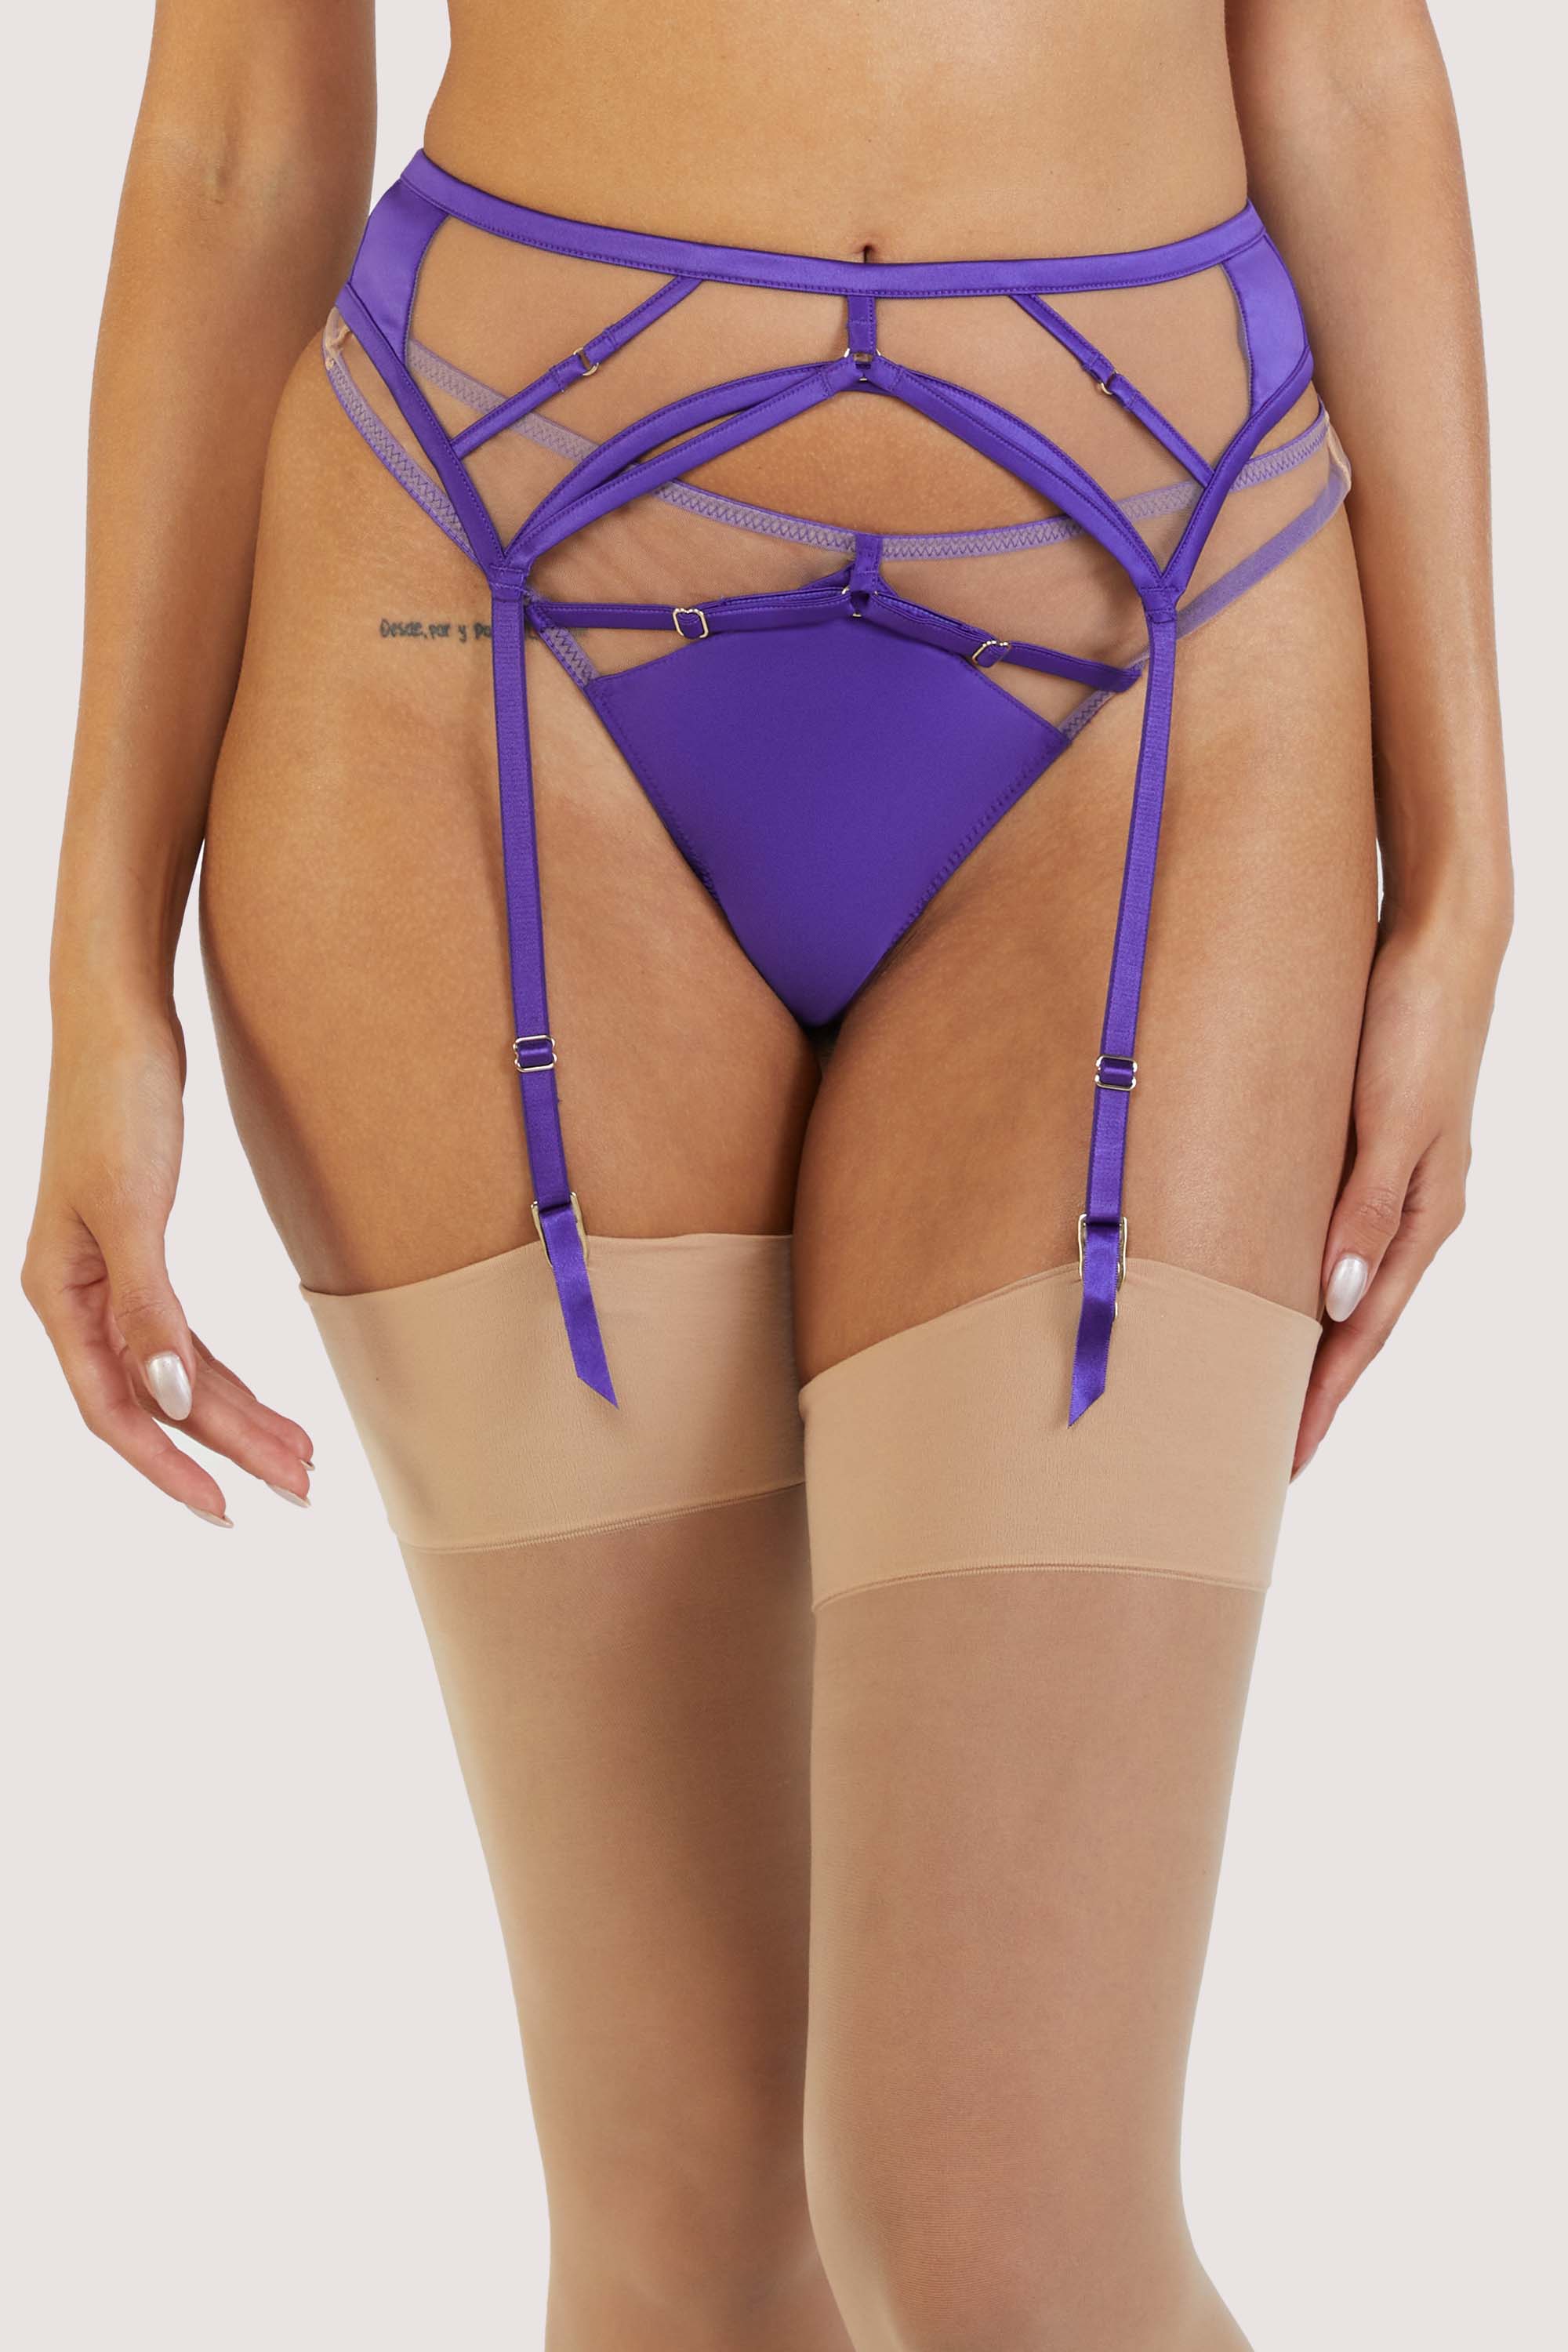 Ramona Purple Strap Detail Illusion Mesh Suspender 10